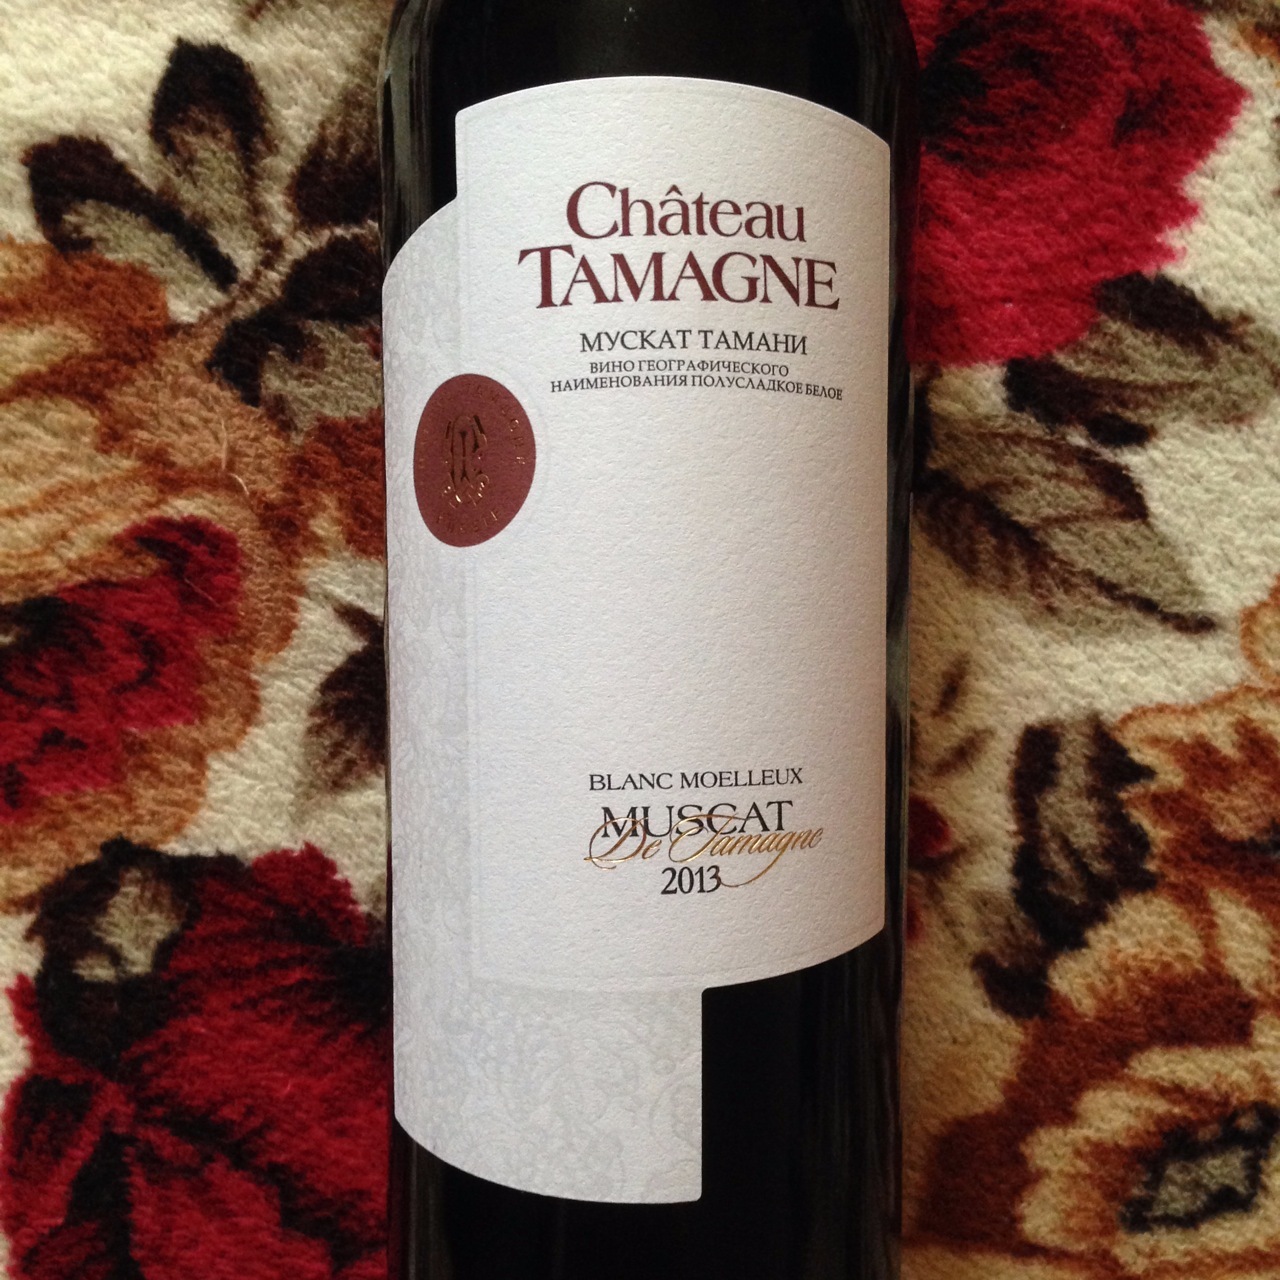 Мерло тамань красное. Шато Тамань вино красное. Вино Chateau Tamagne красное полусладкое. Шато Тамань вино красное полусладкое. Вино Шато Тамань Мерло красное полусладкое.